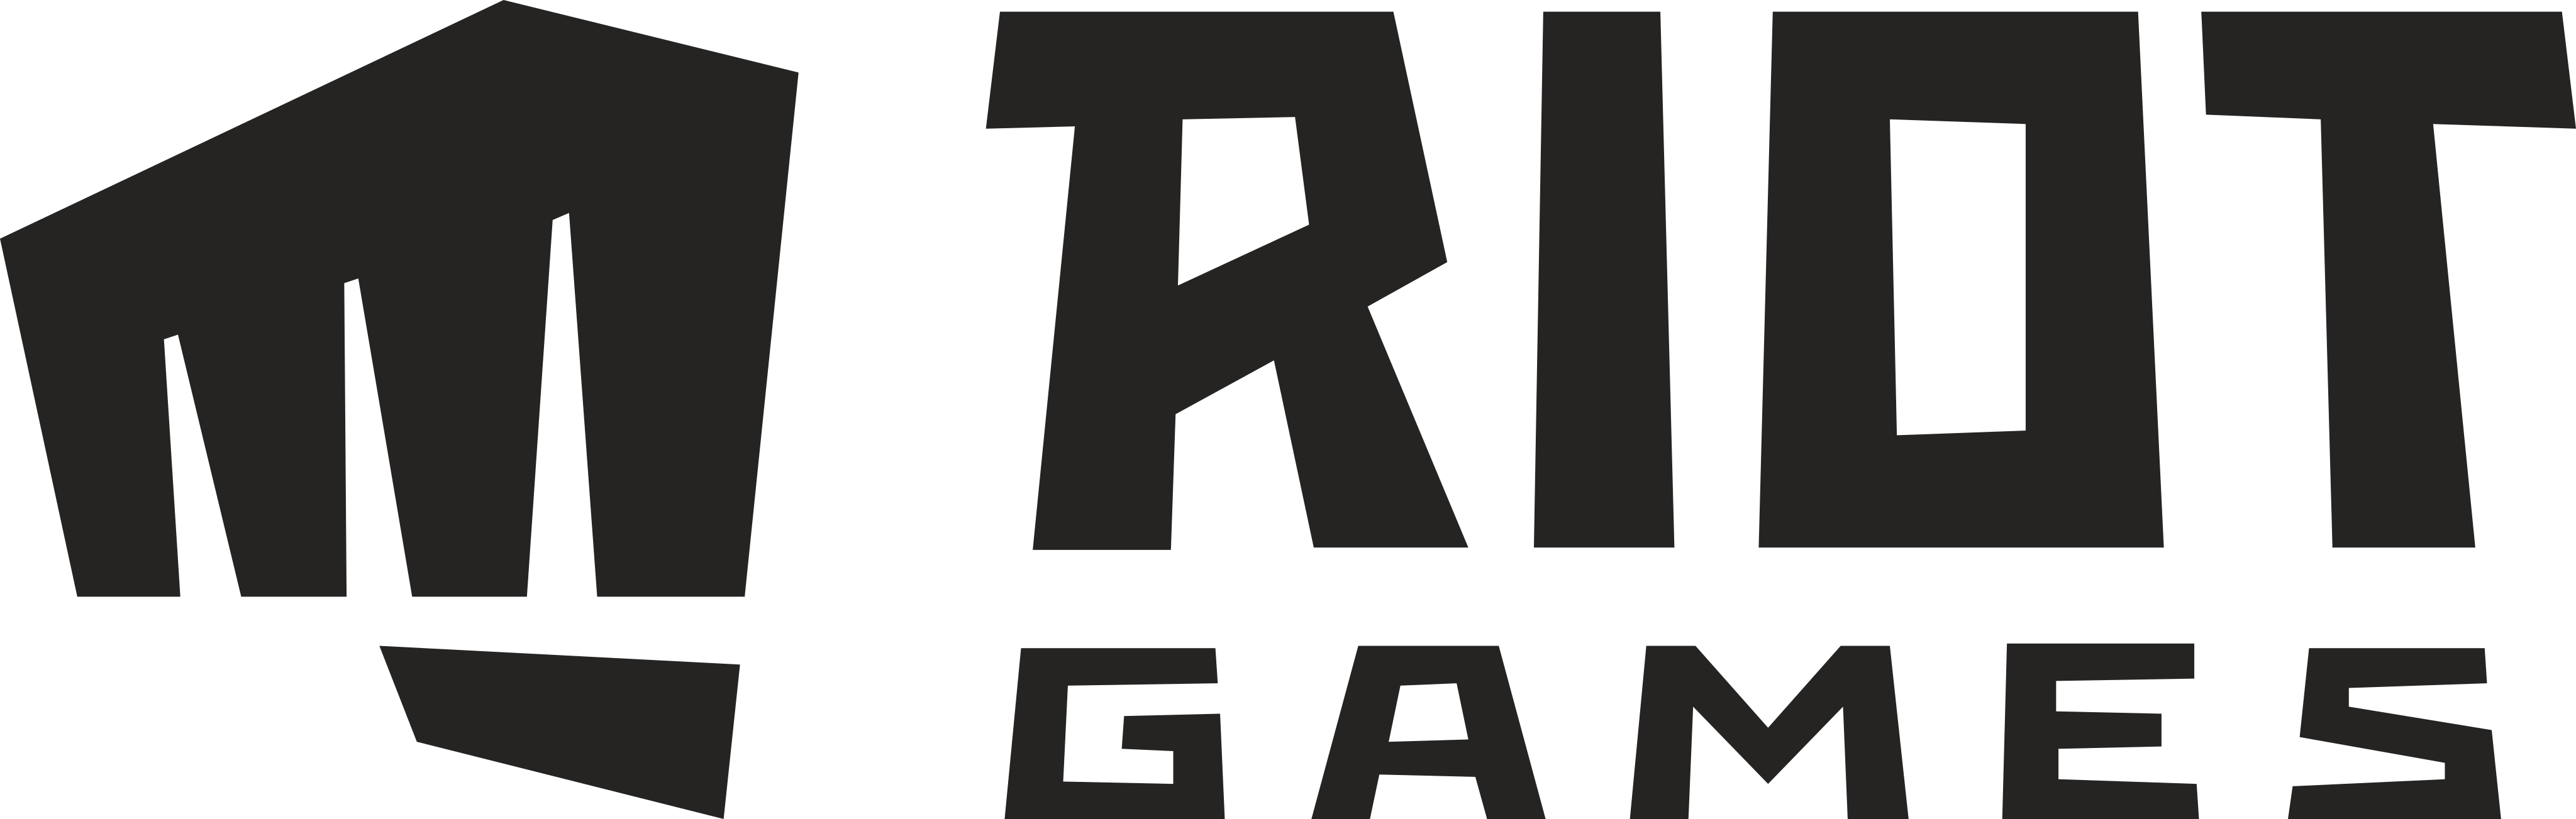 riot-games-logo-1